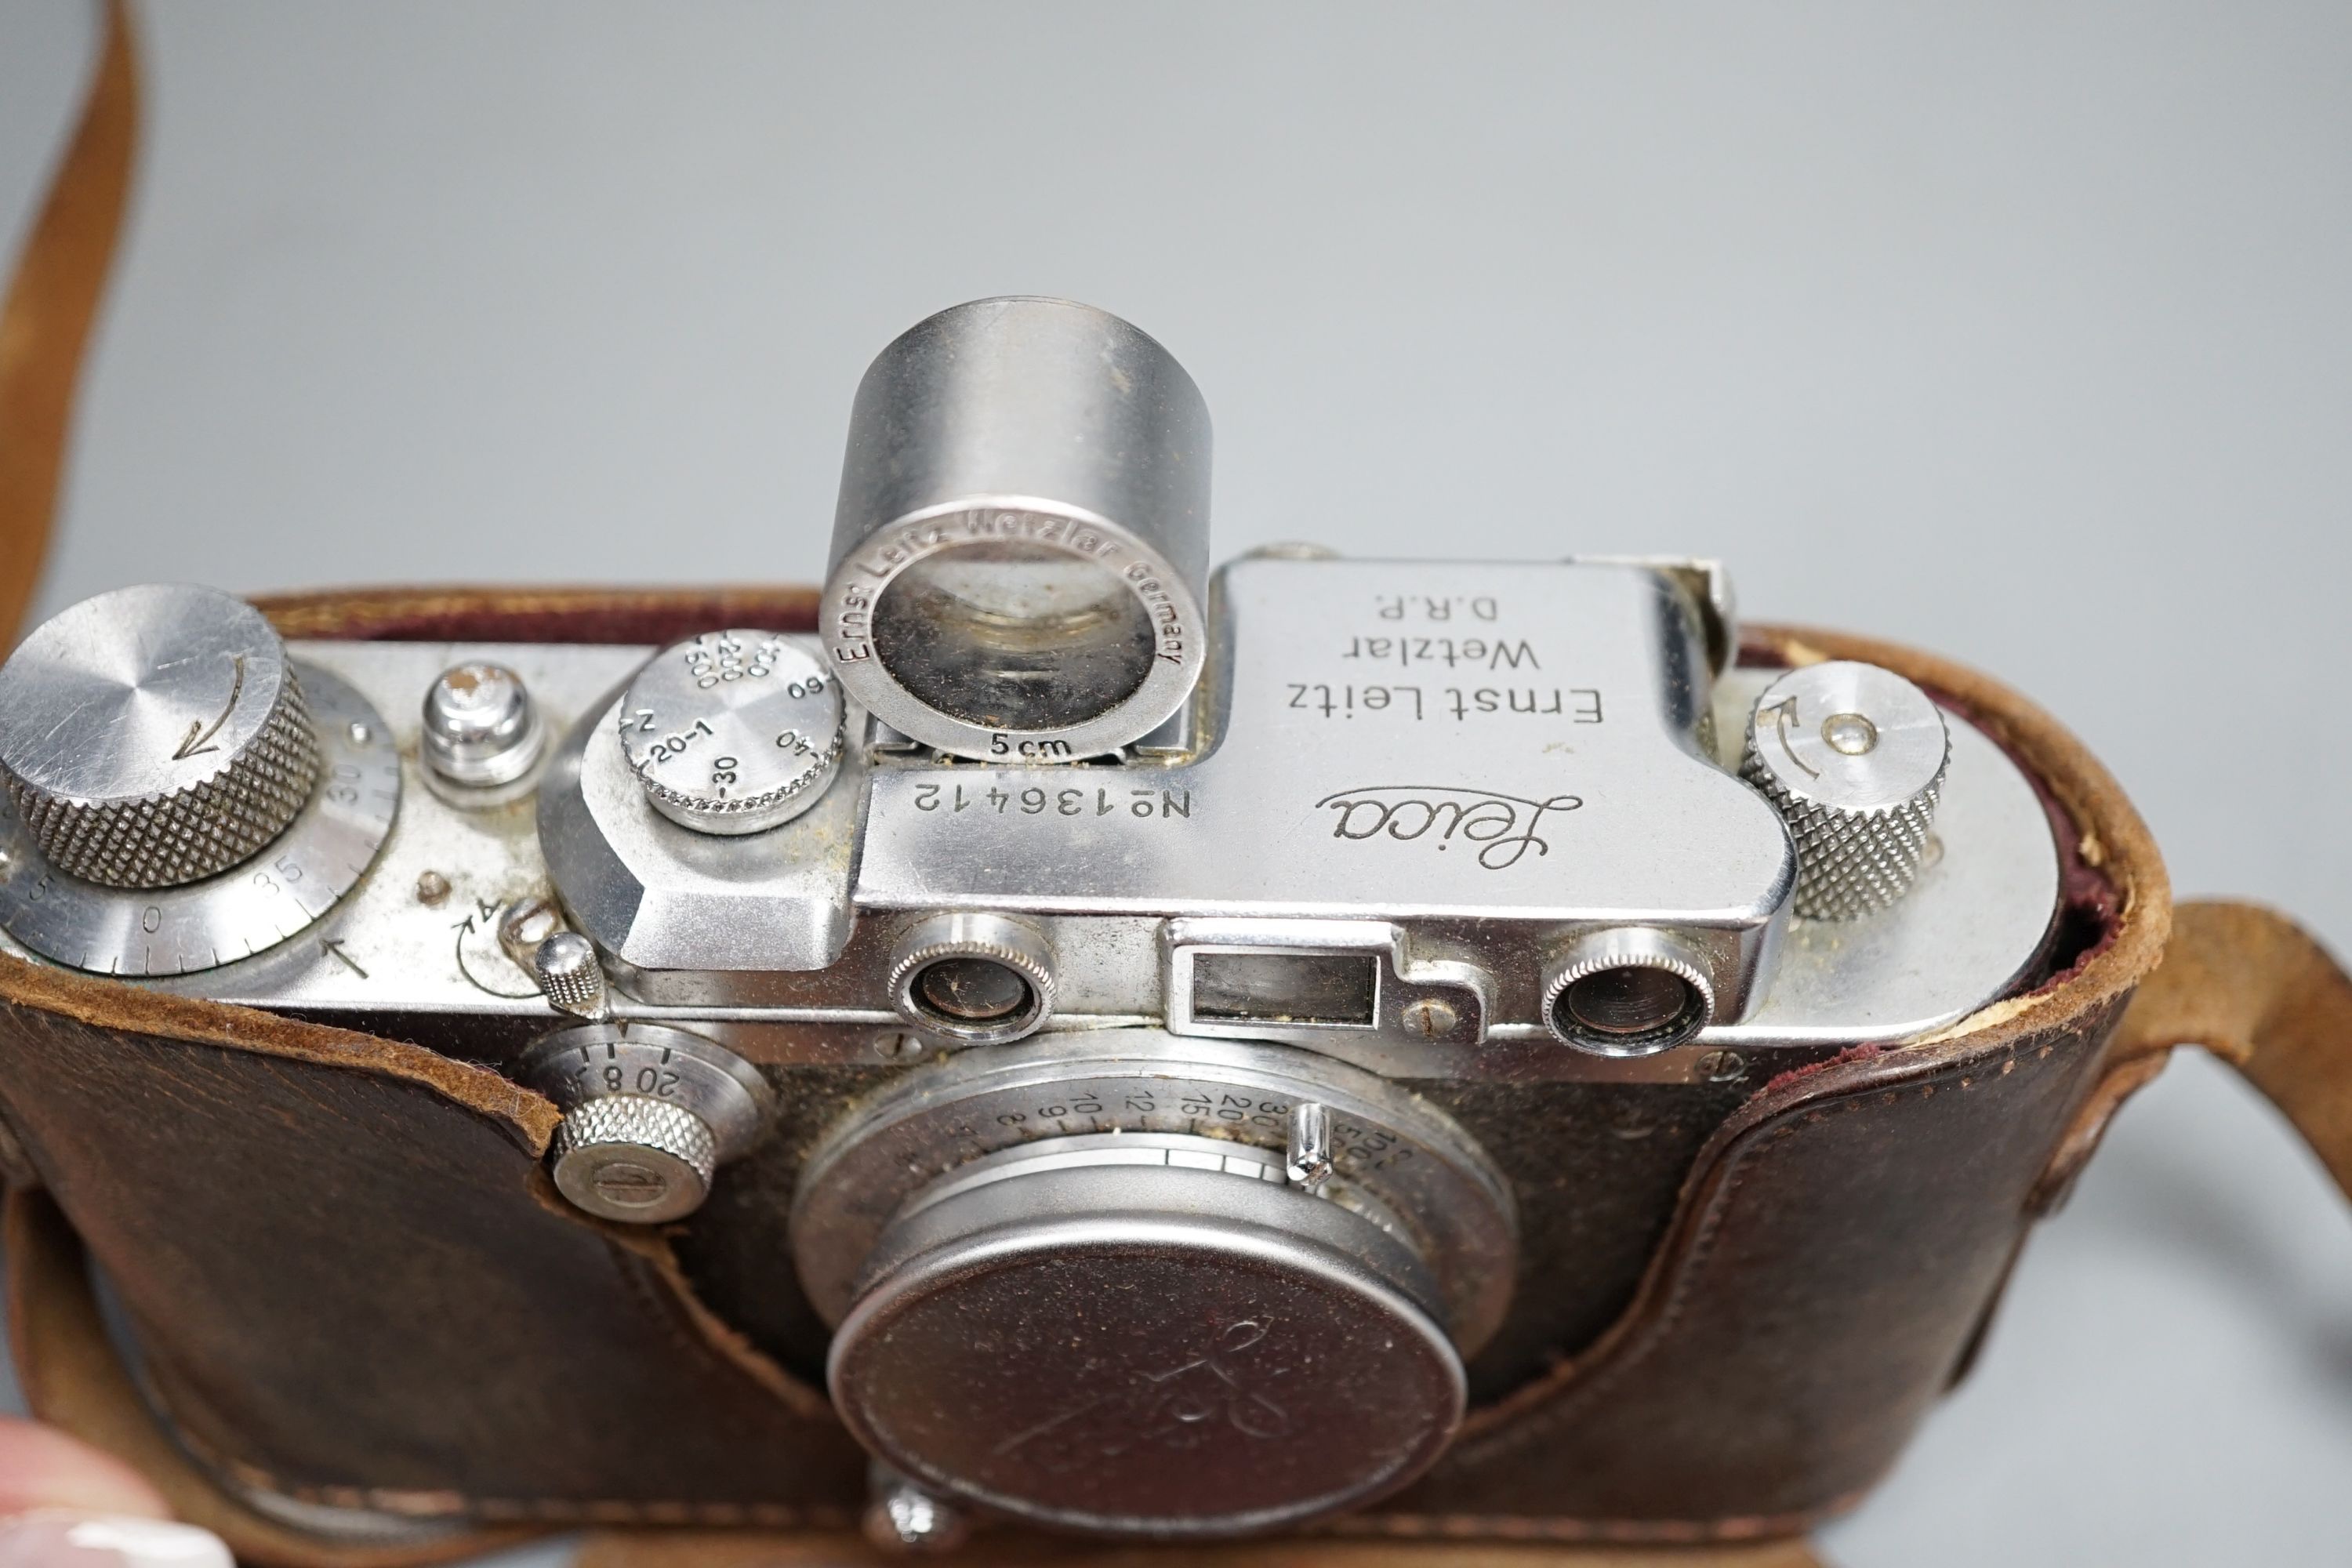 A Leica Model III/IIIA camera, c.1930, no.136412, in leather case